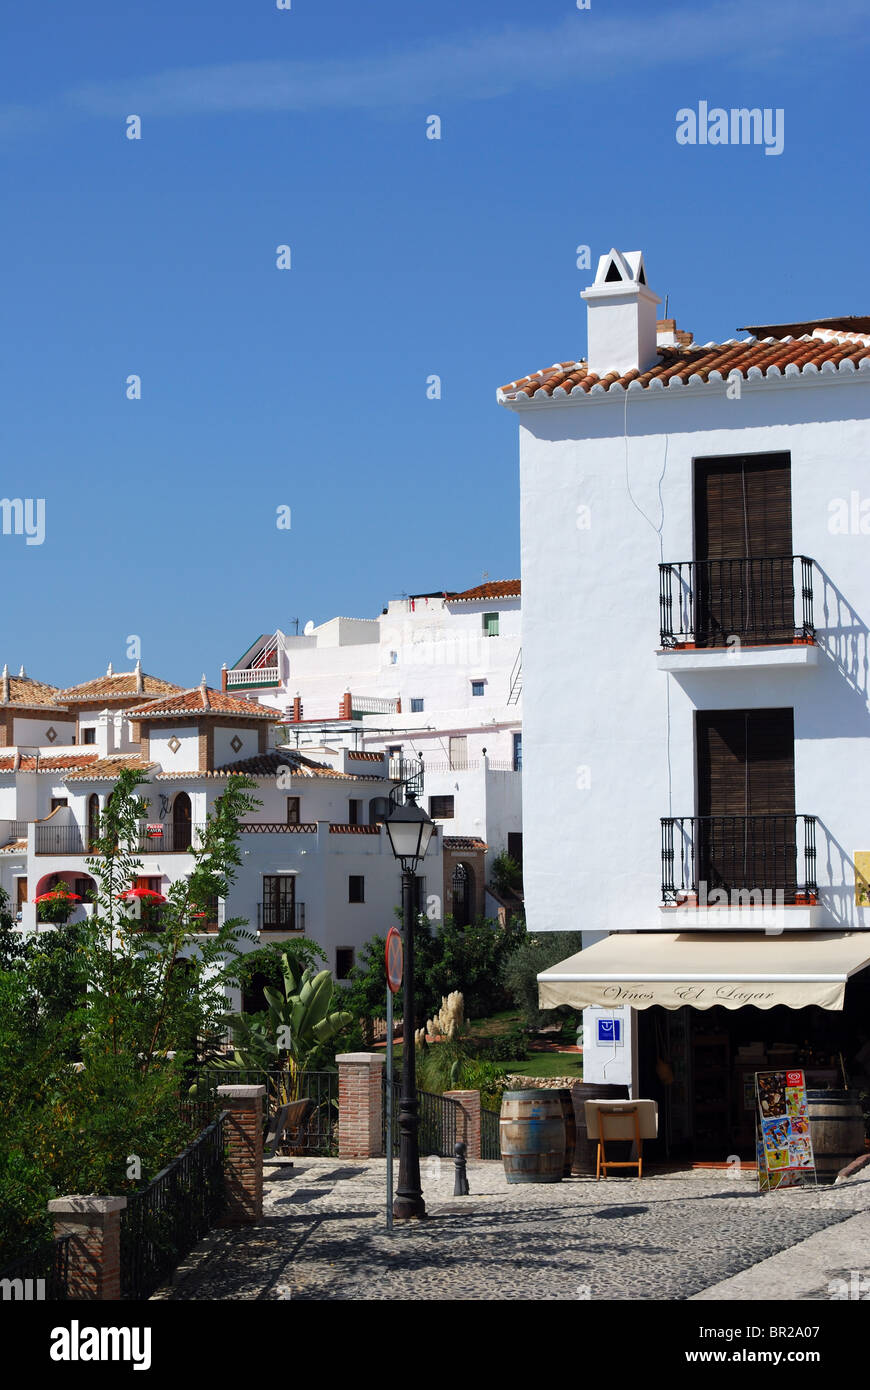 Village street, whitewashed village (pueblo blanco), Frigiliana, Costa del Sol, Malaga Province, Andalucia, Spain, Europe. Stock Photo